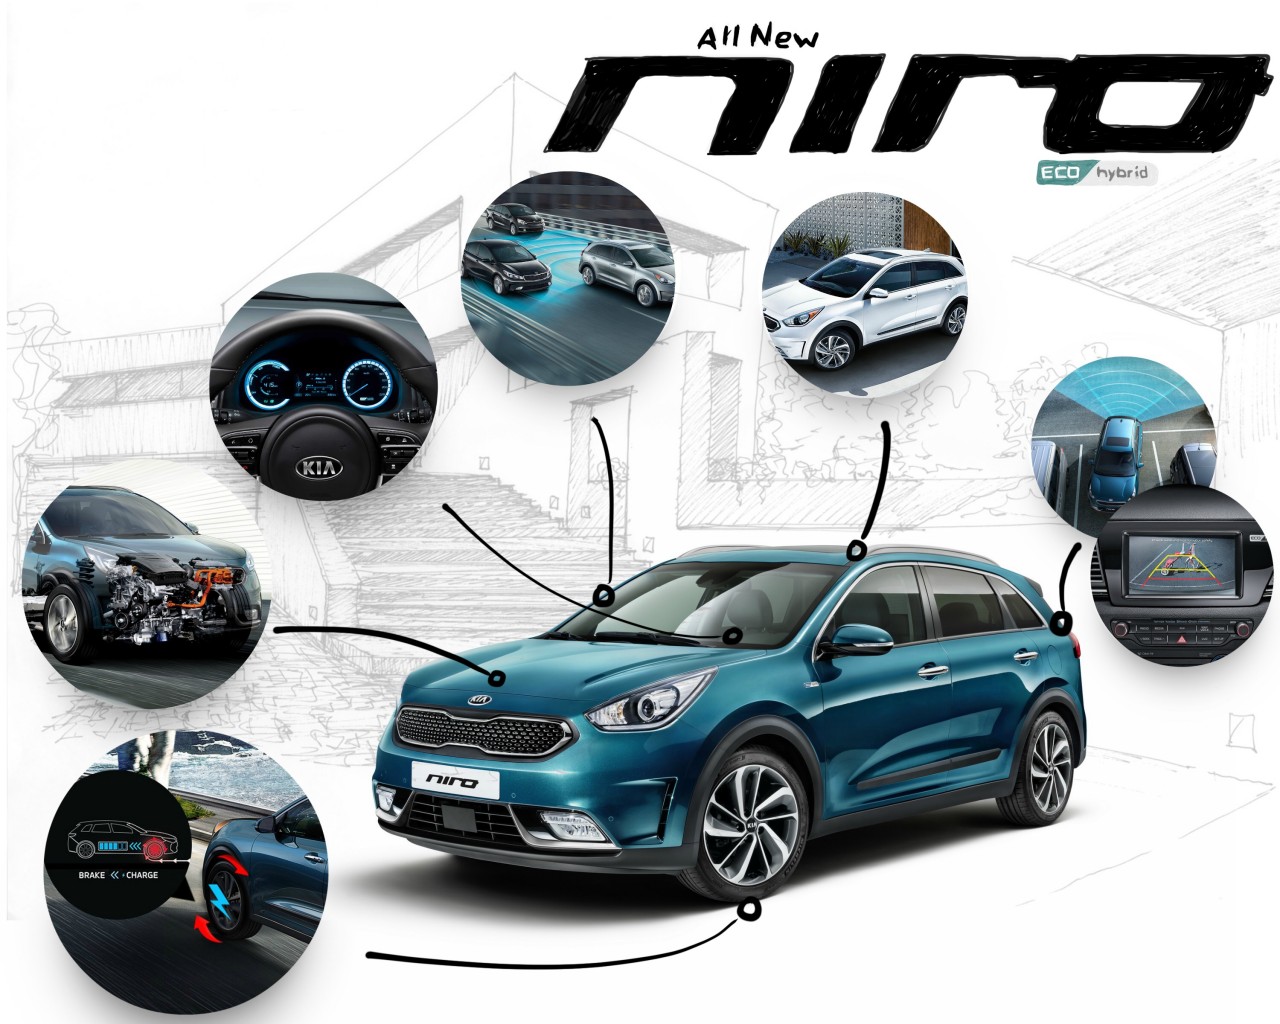 All New Niro Hybrid in Trinidad and Tobago!